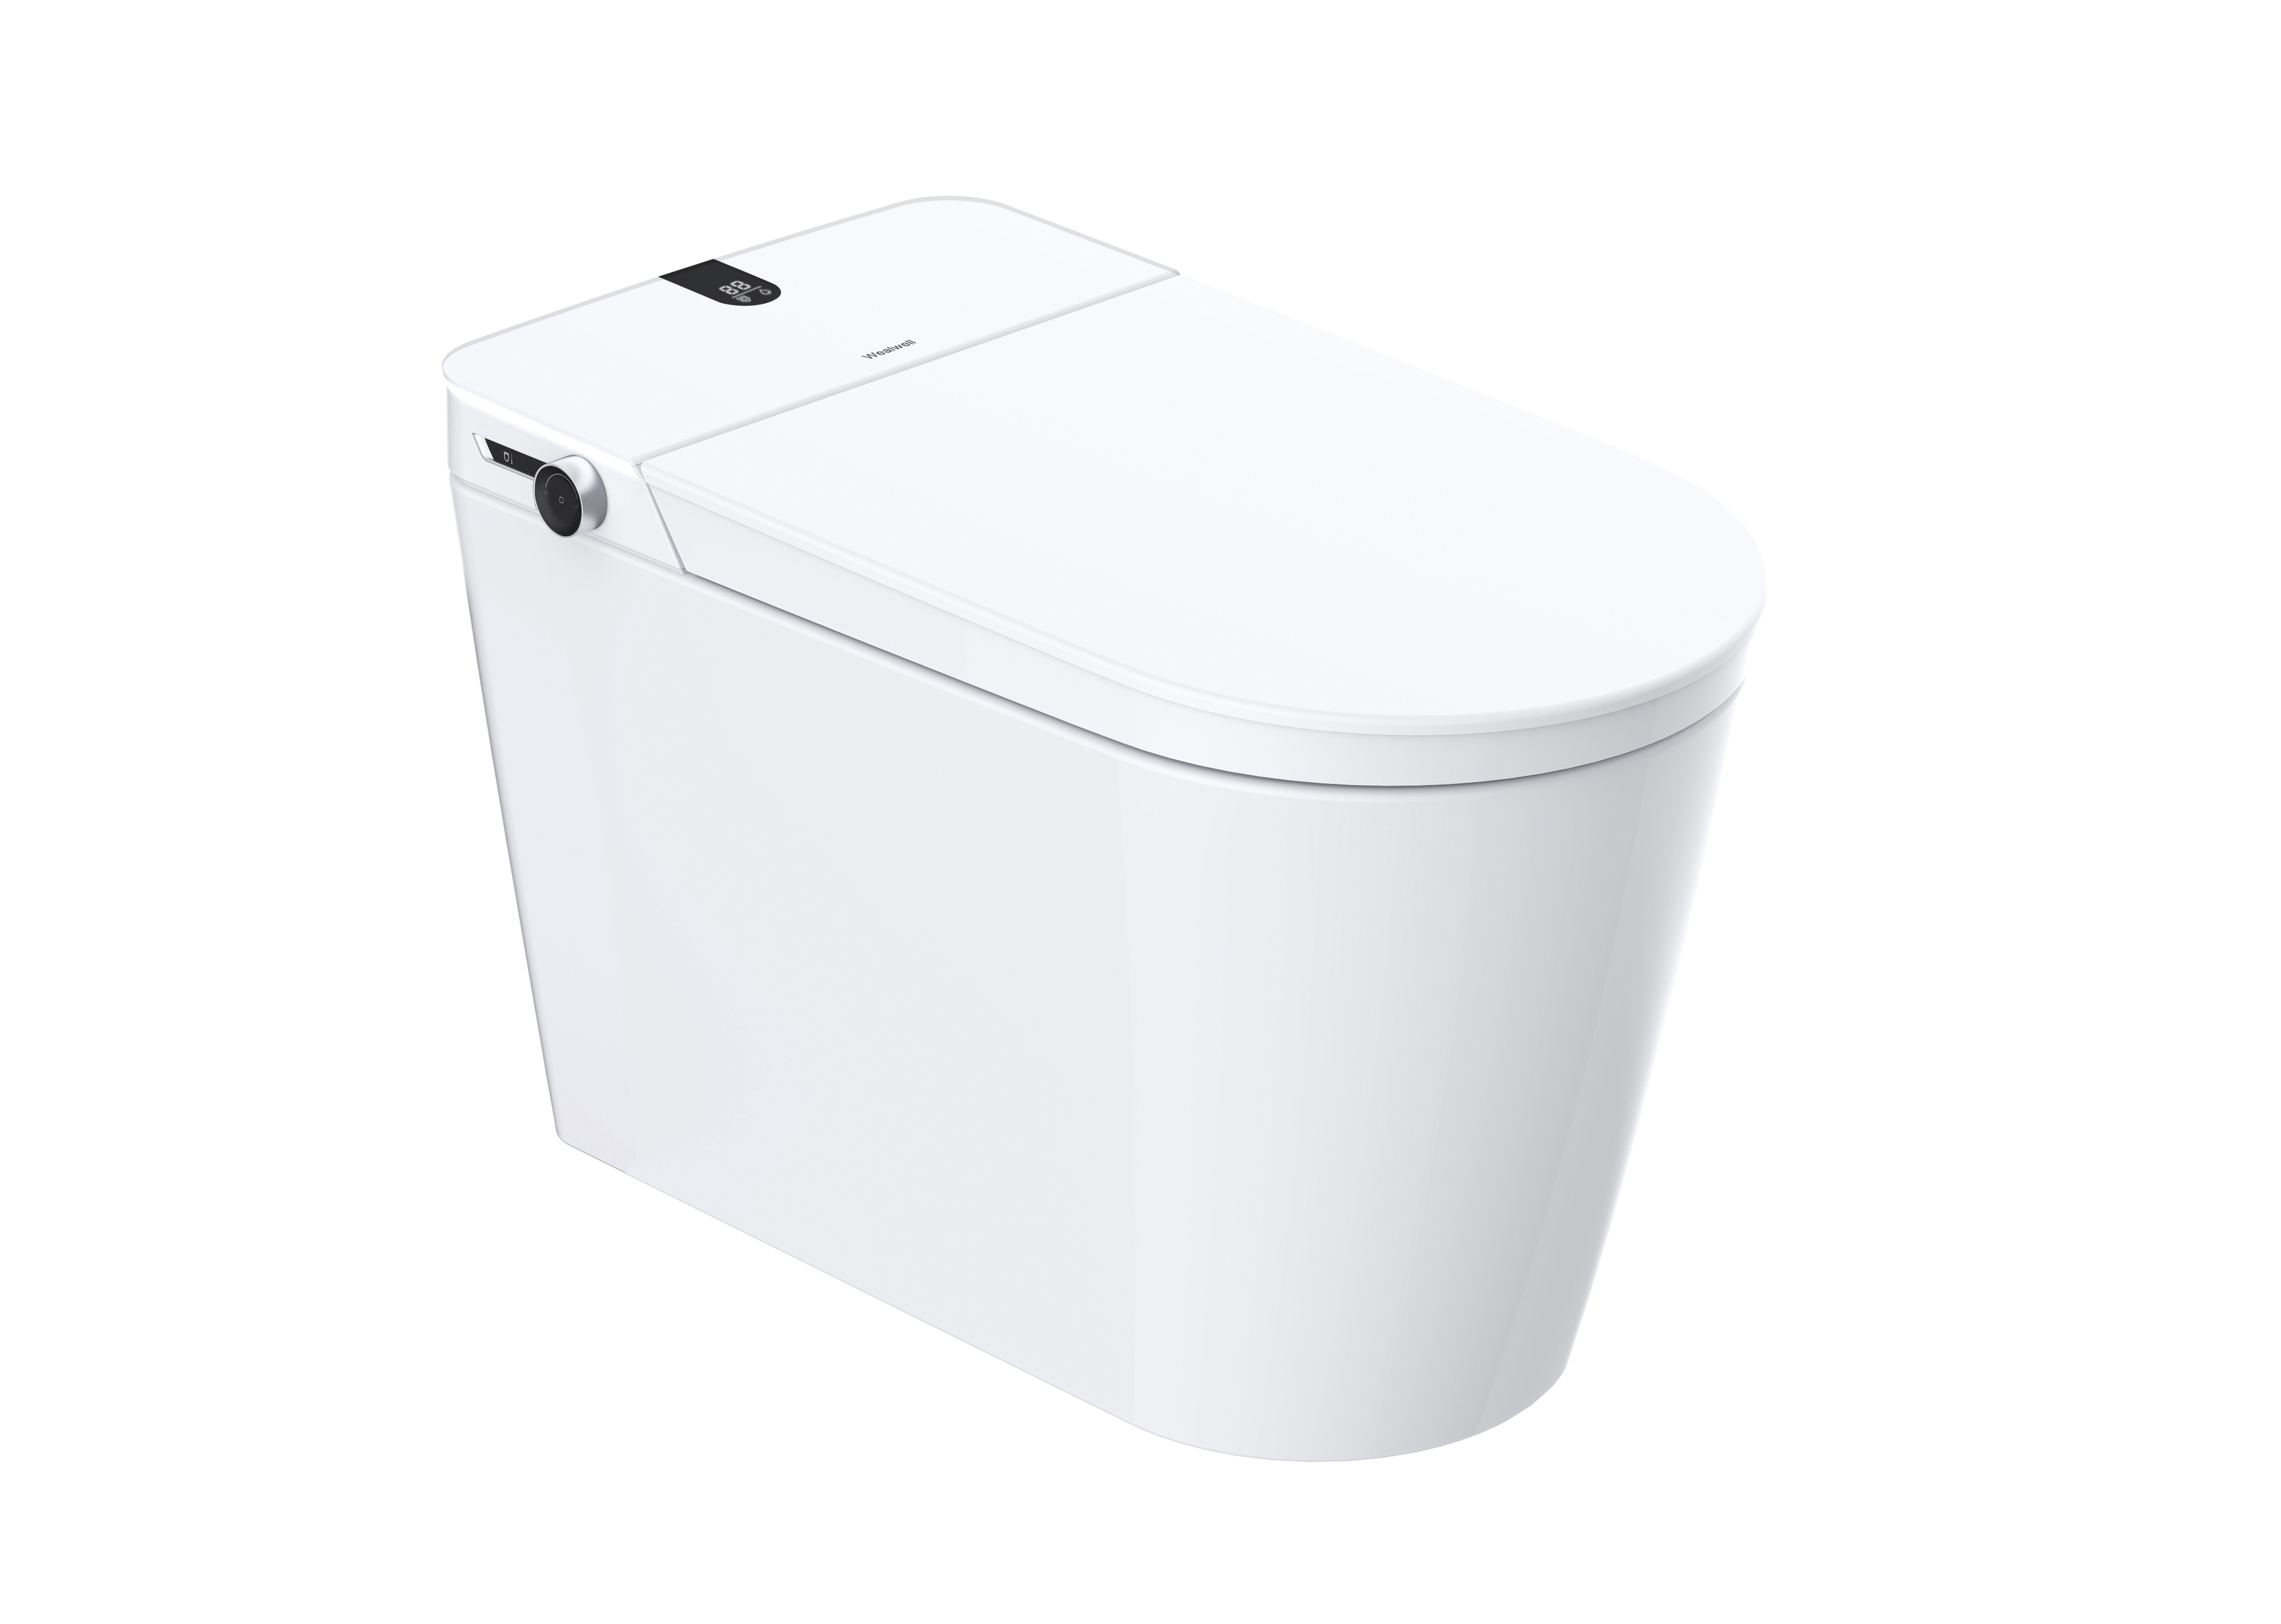 Wealwell CU114 Smart Toilet